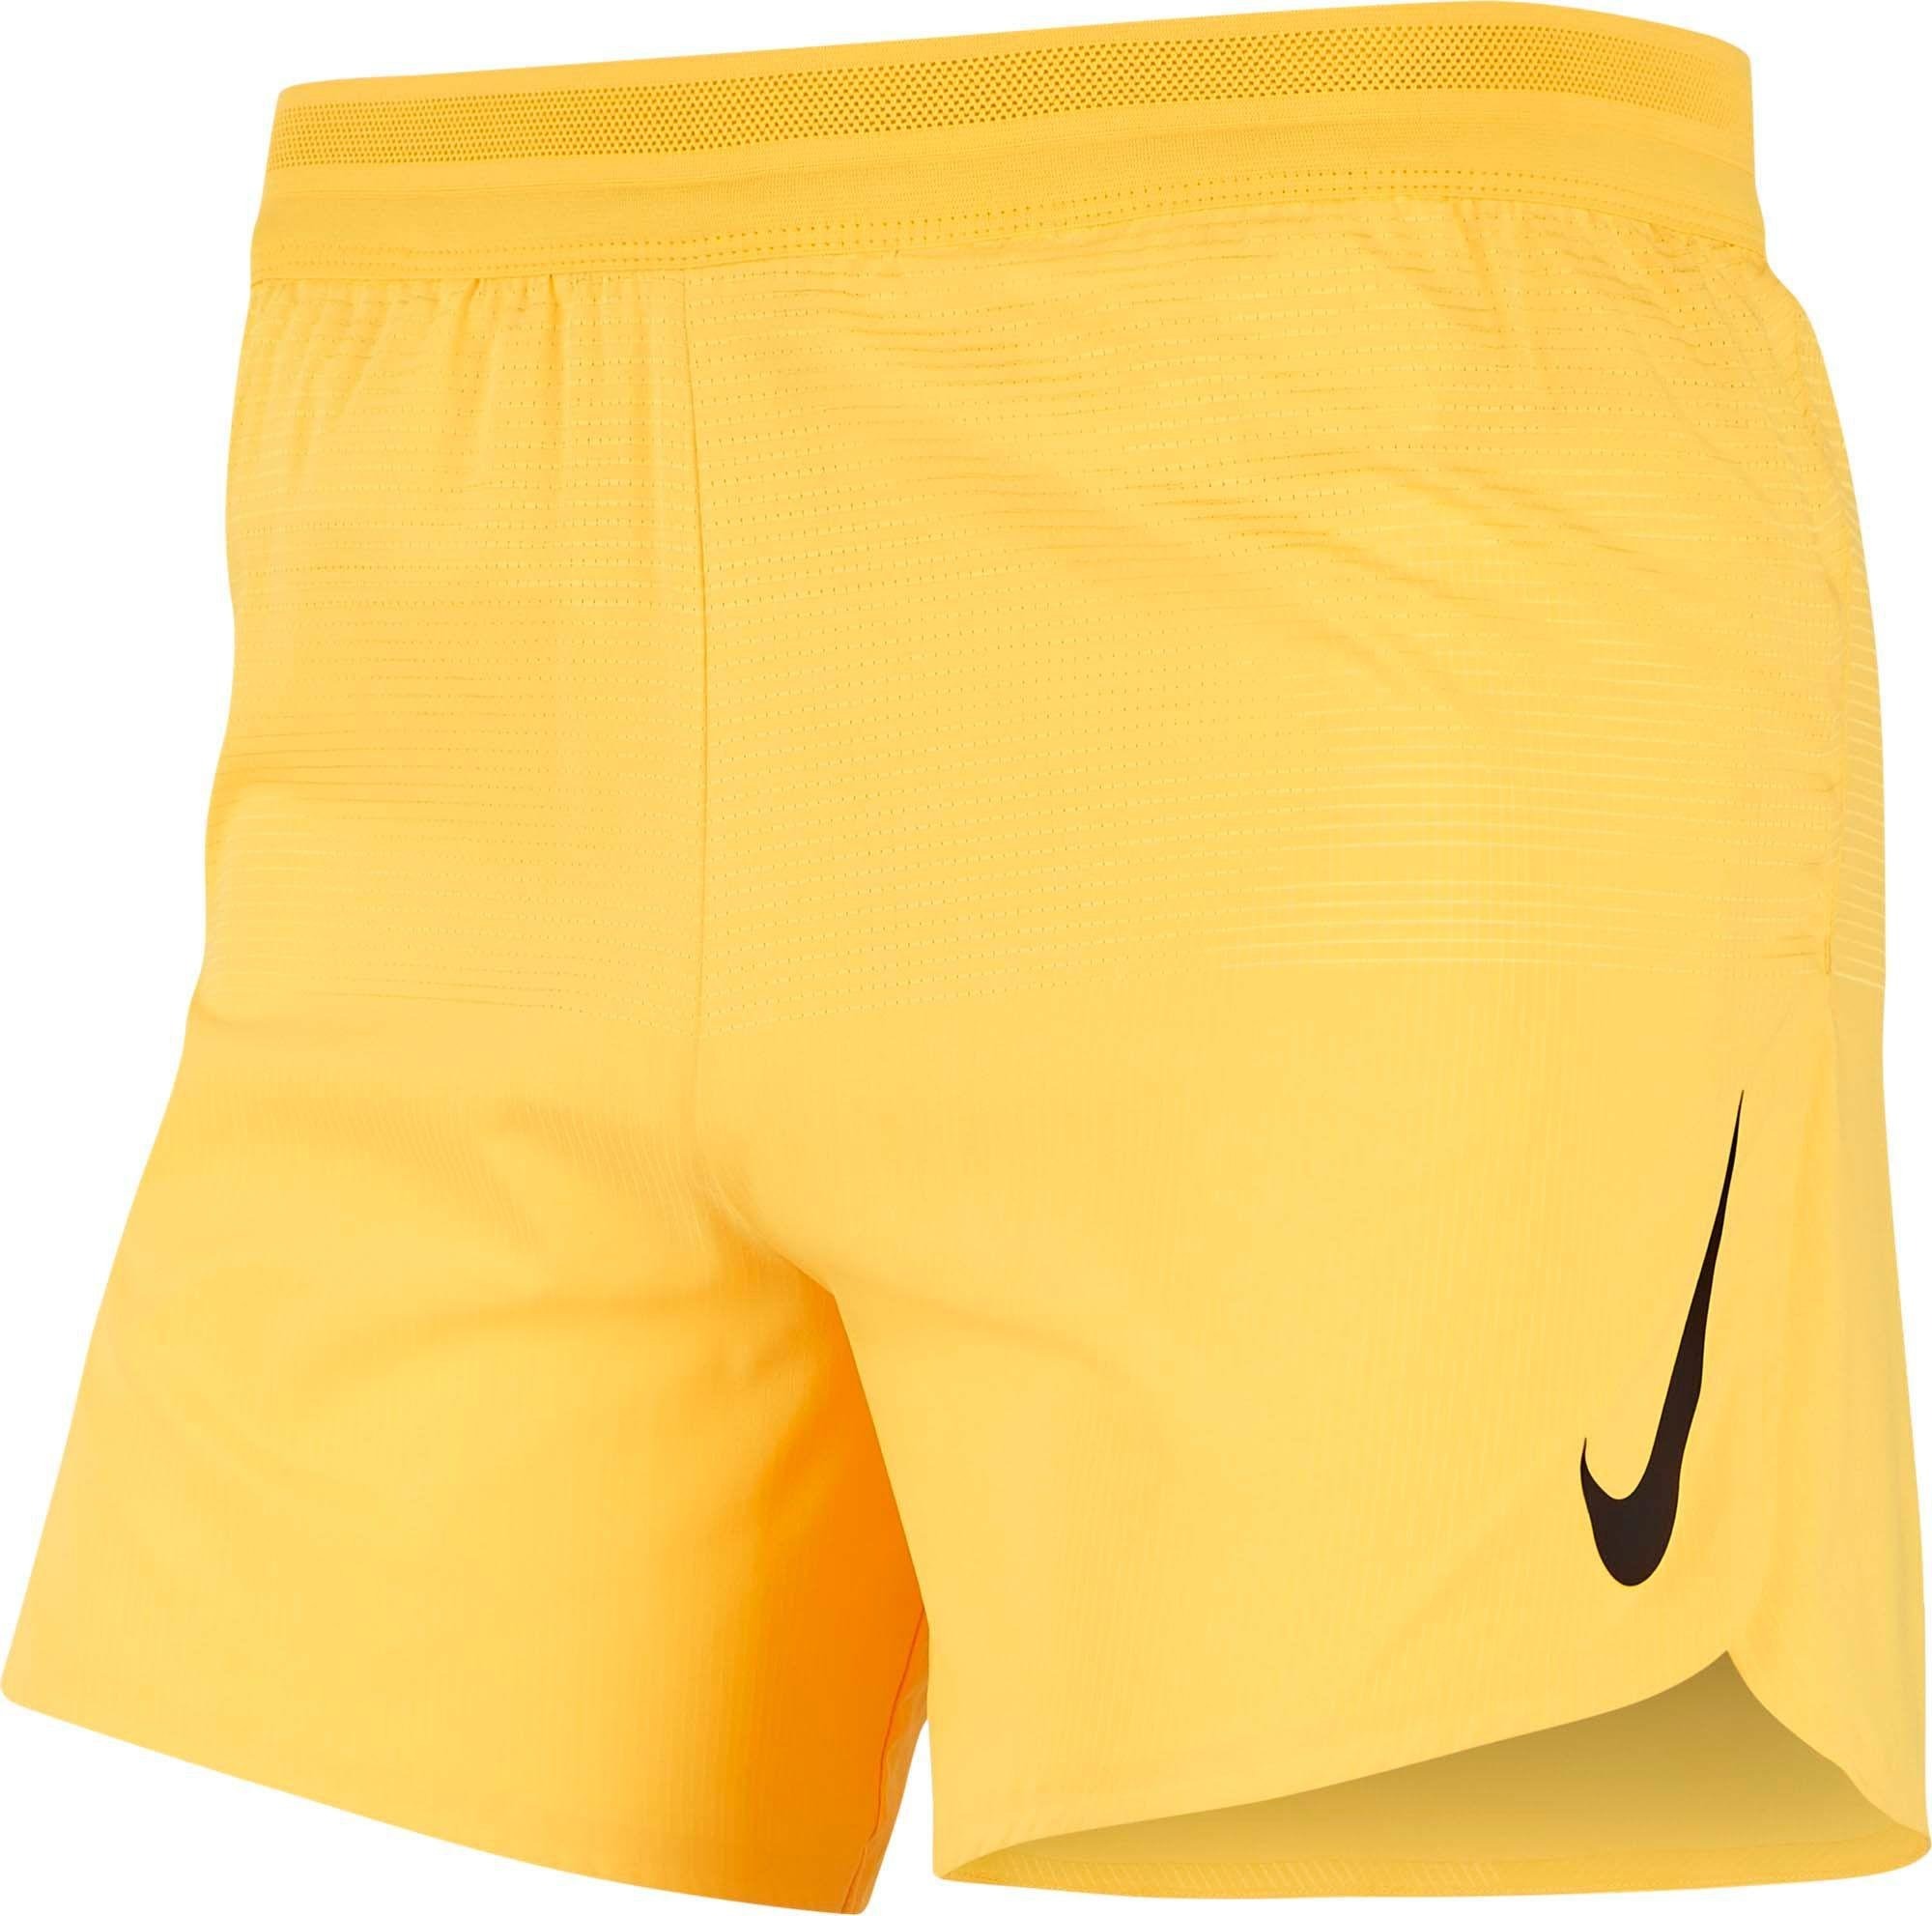 9 Amazing Yellow Running Shorts For 2023